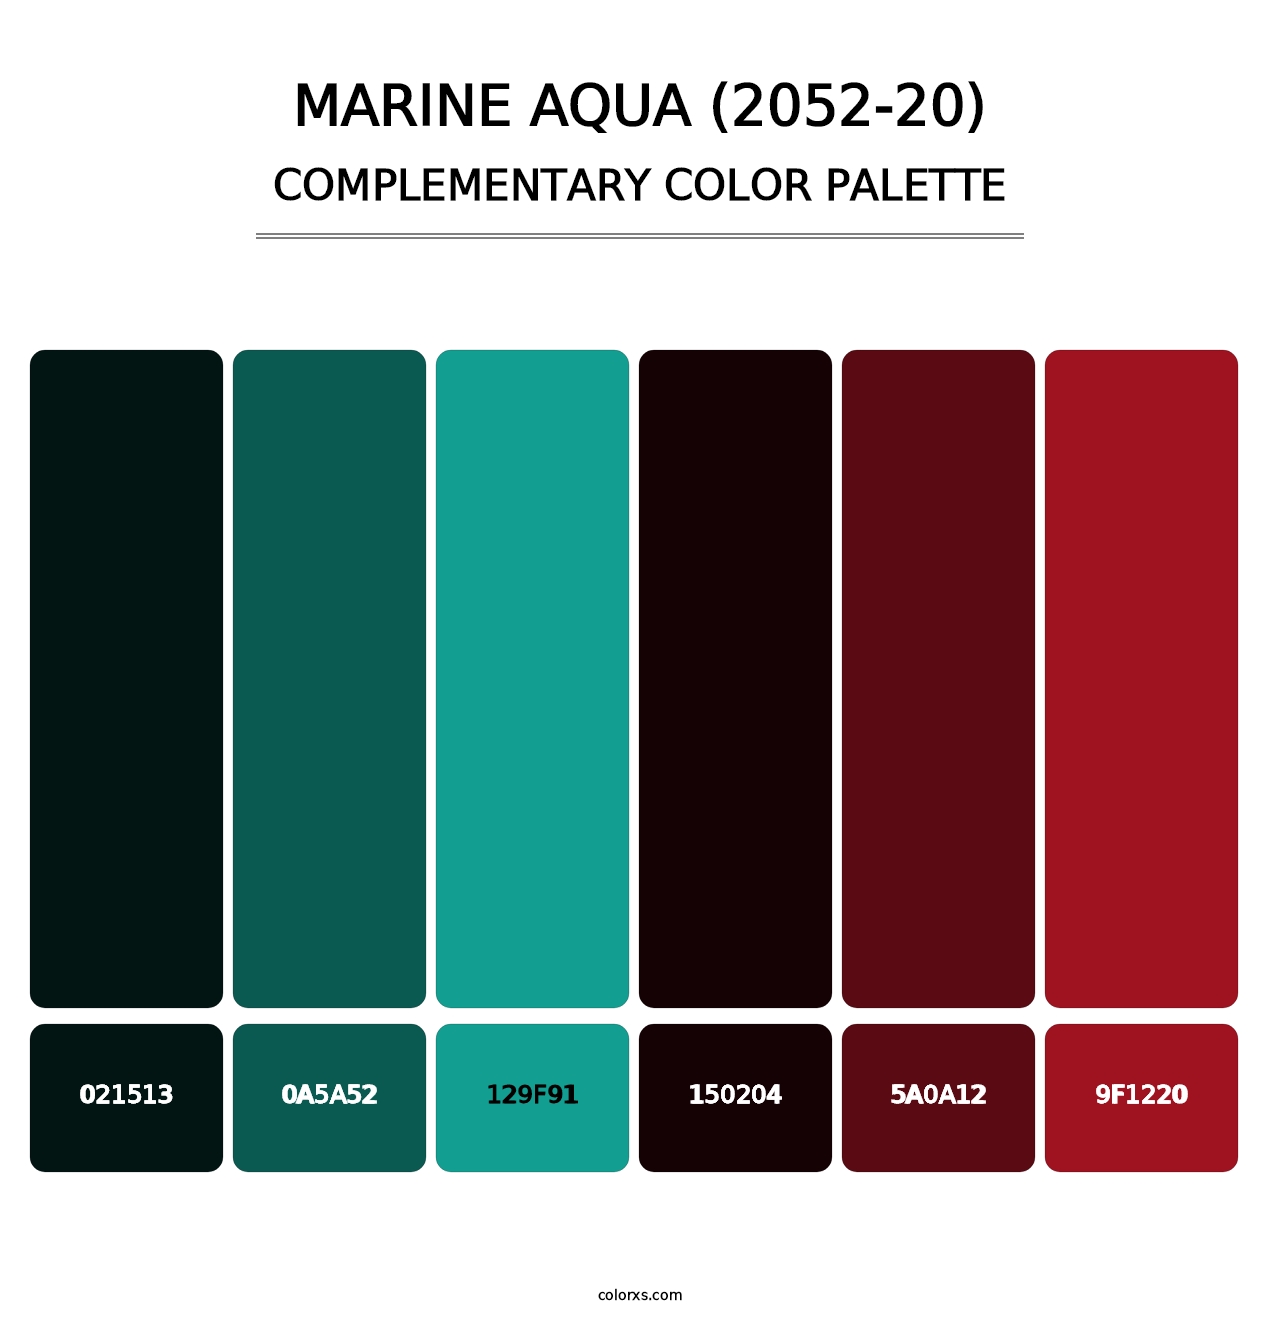 Marine Aqua (2052-20) - Complementary Color Palette